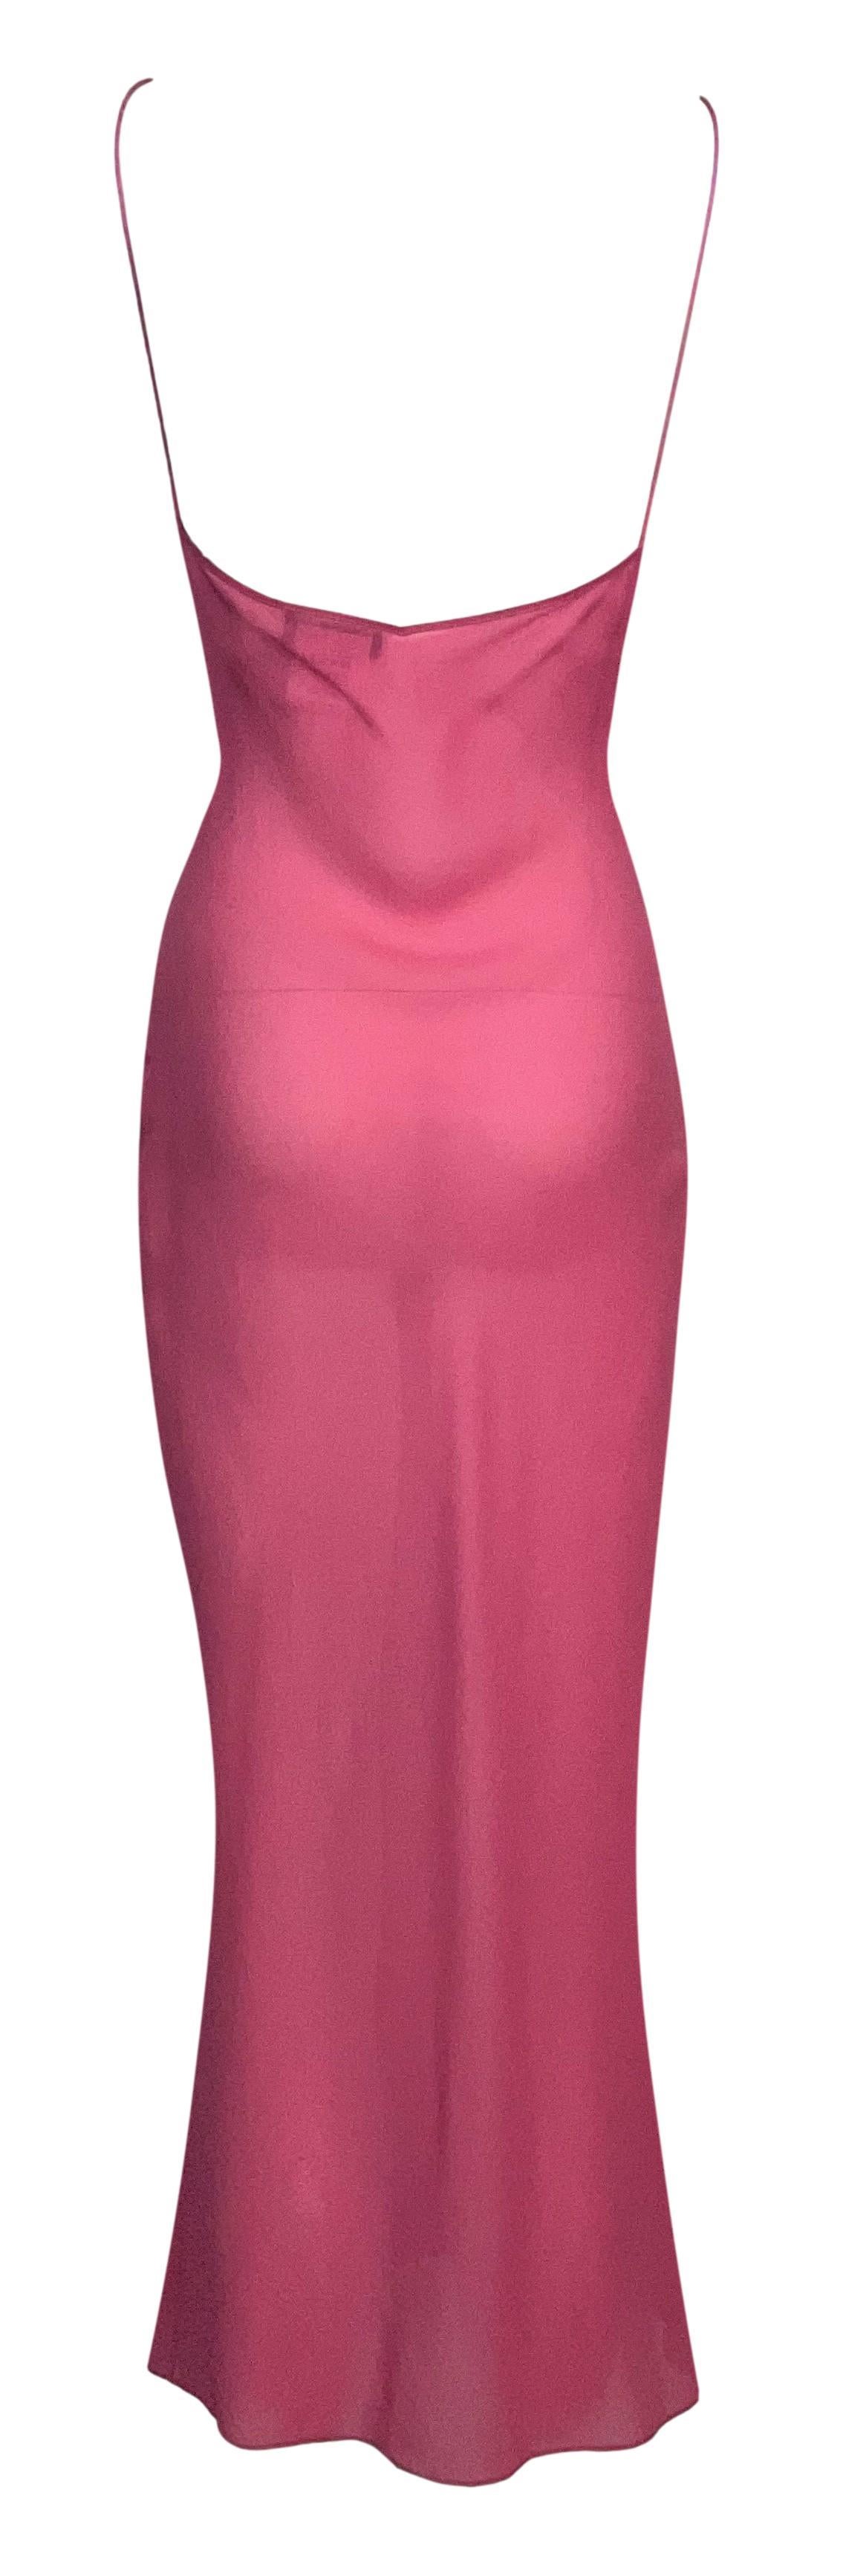 rihanna sheer pink dress